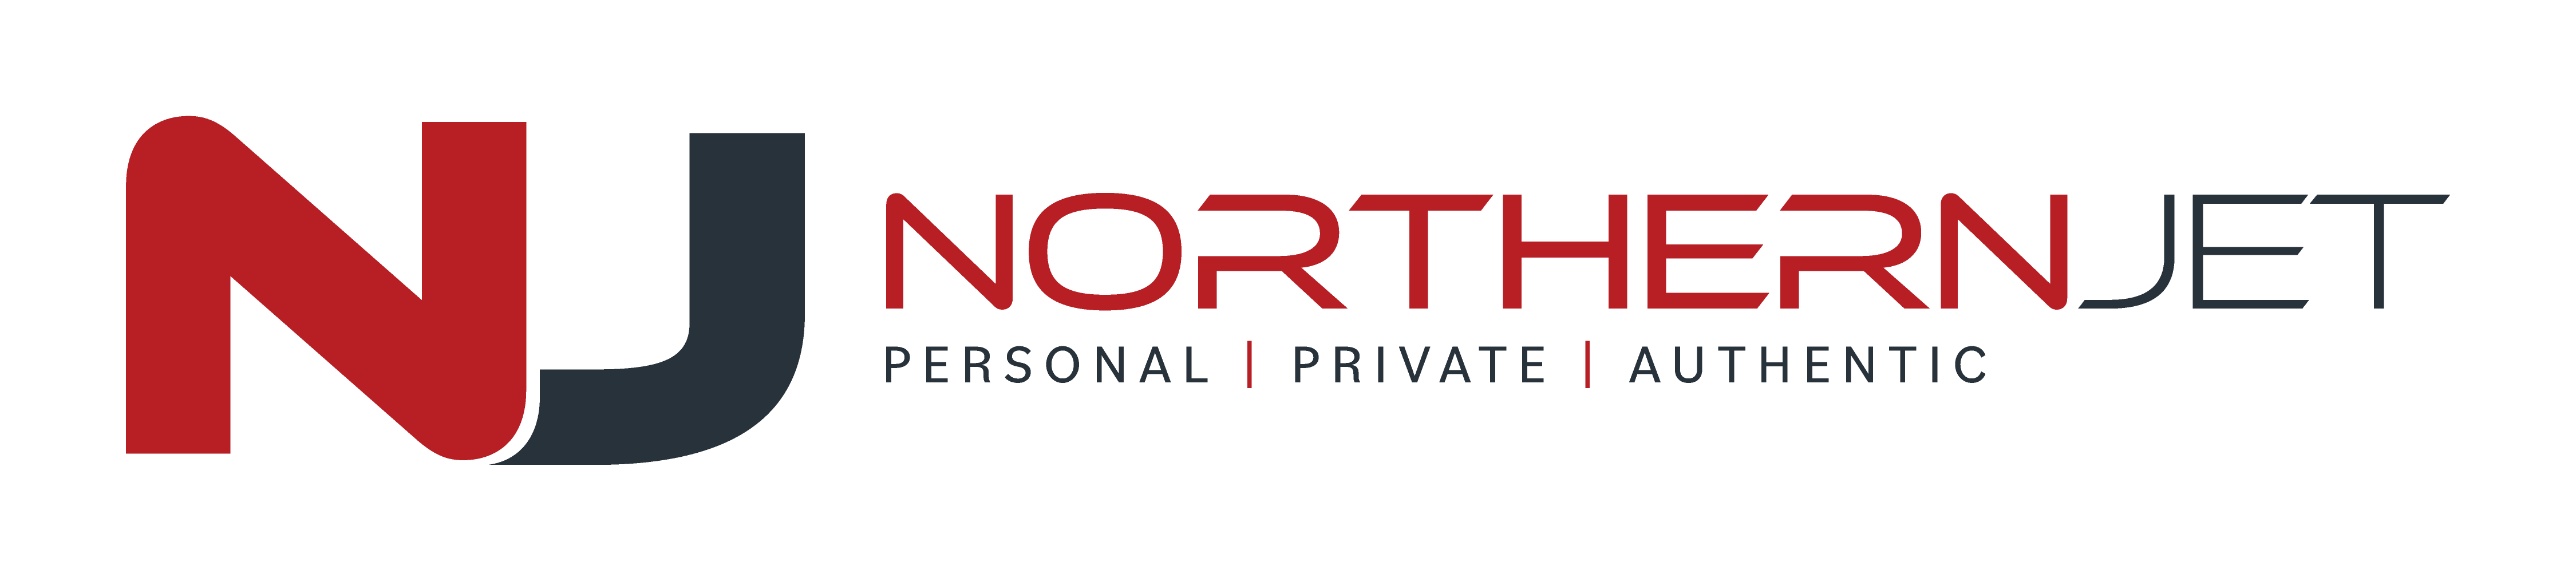 Northern Jet Management, Inc. logo